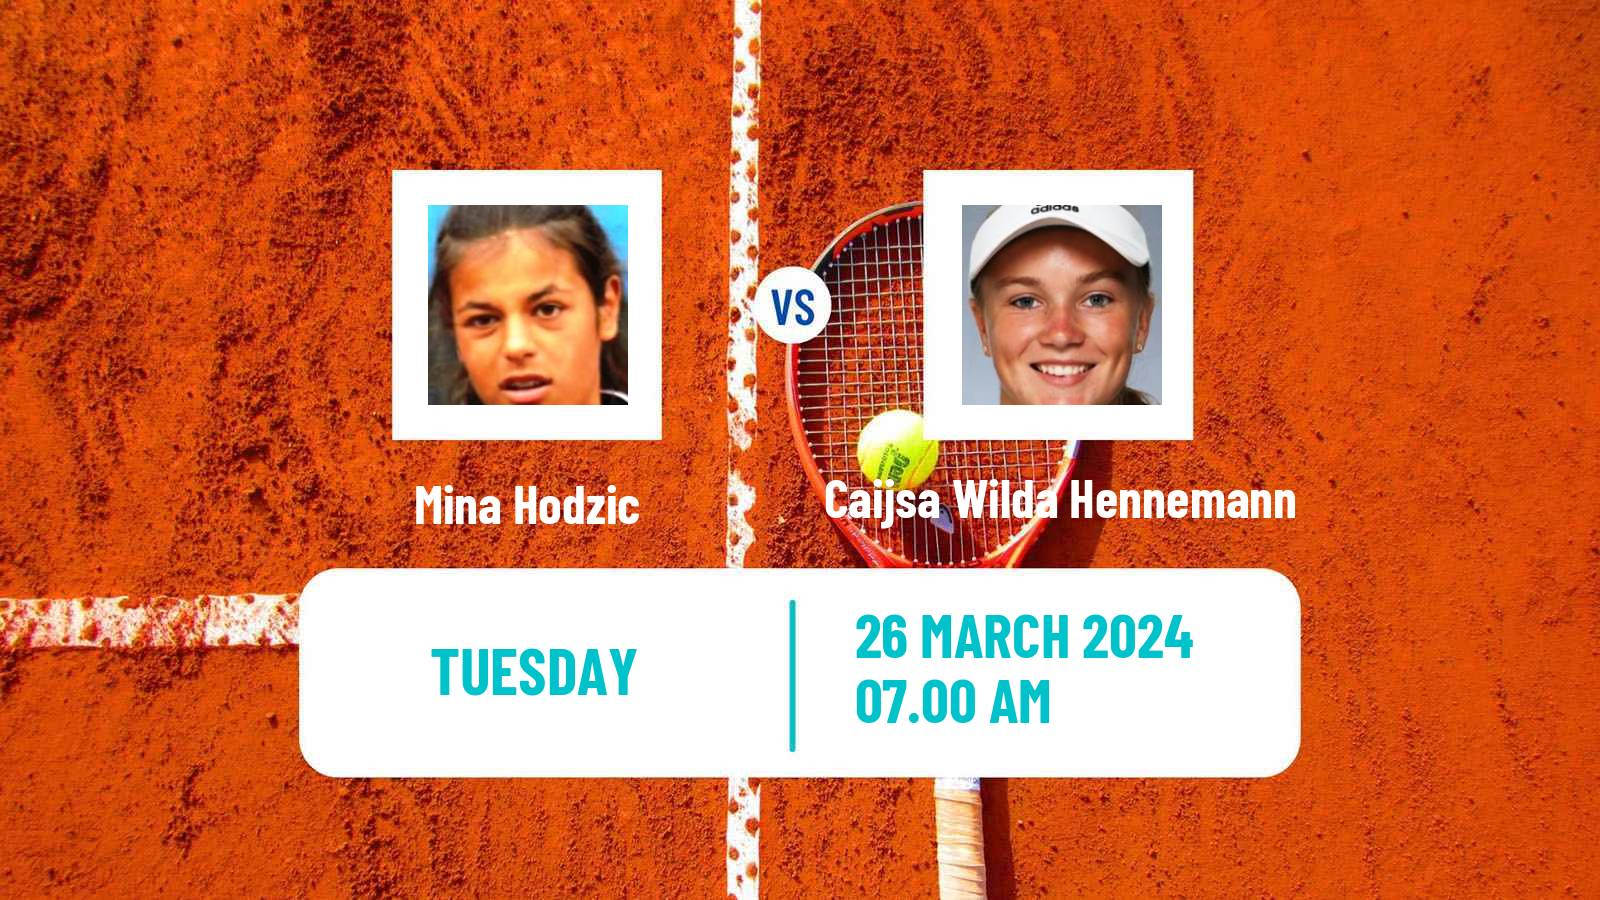 Tennis ITF W35 Terrassa Women Mina Hodzic - Caijsa Wilda Hennemann